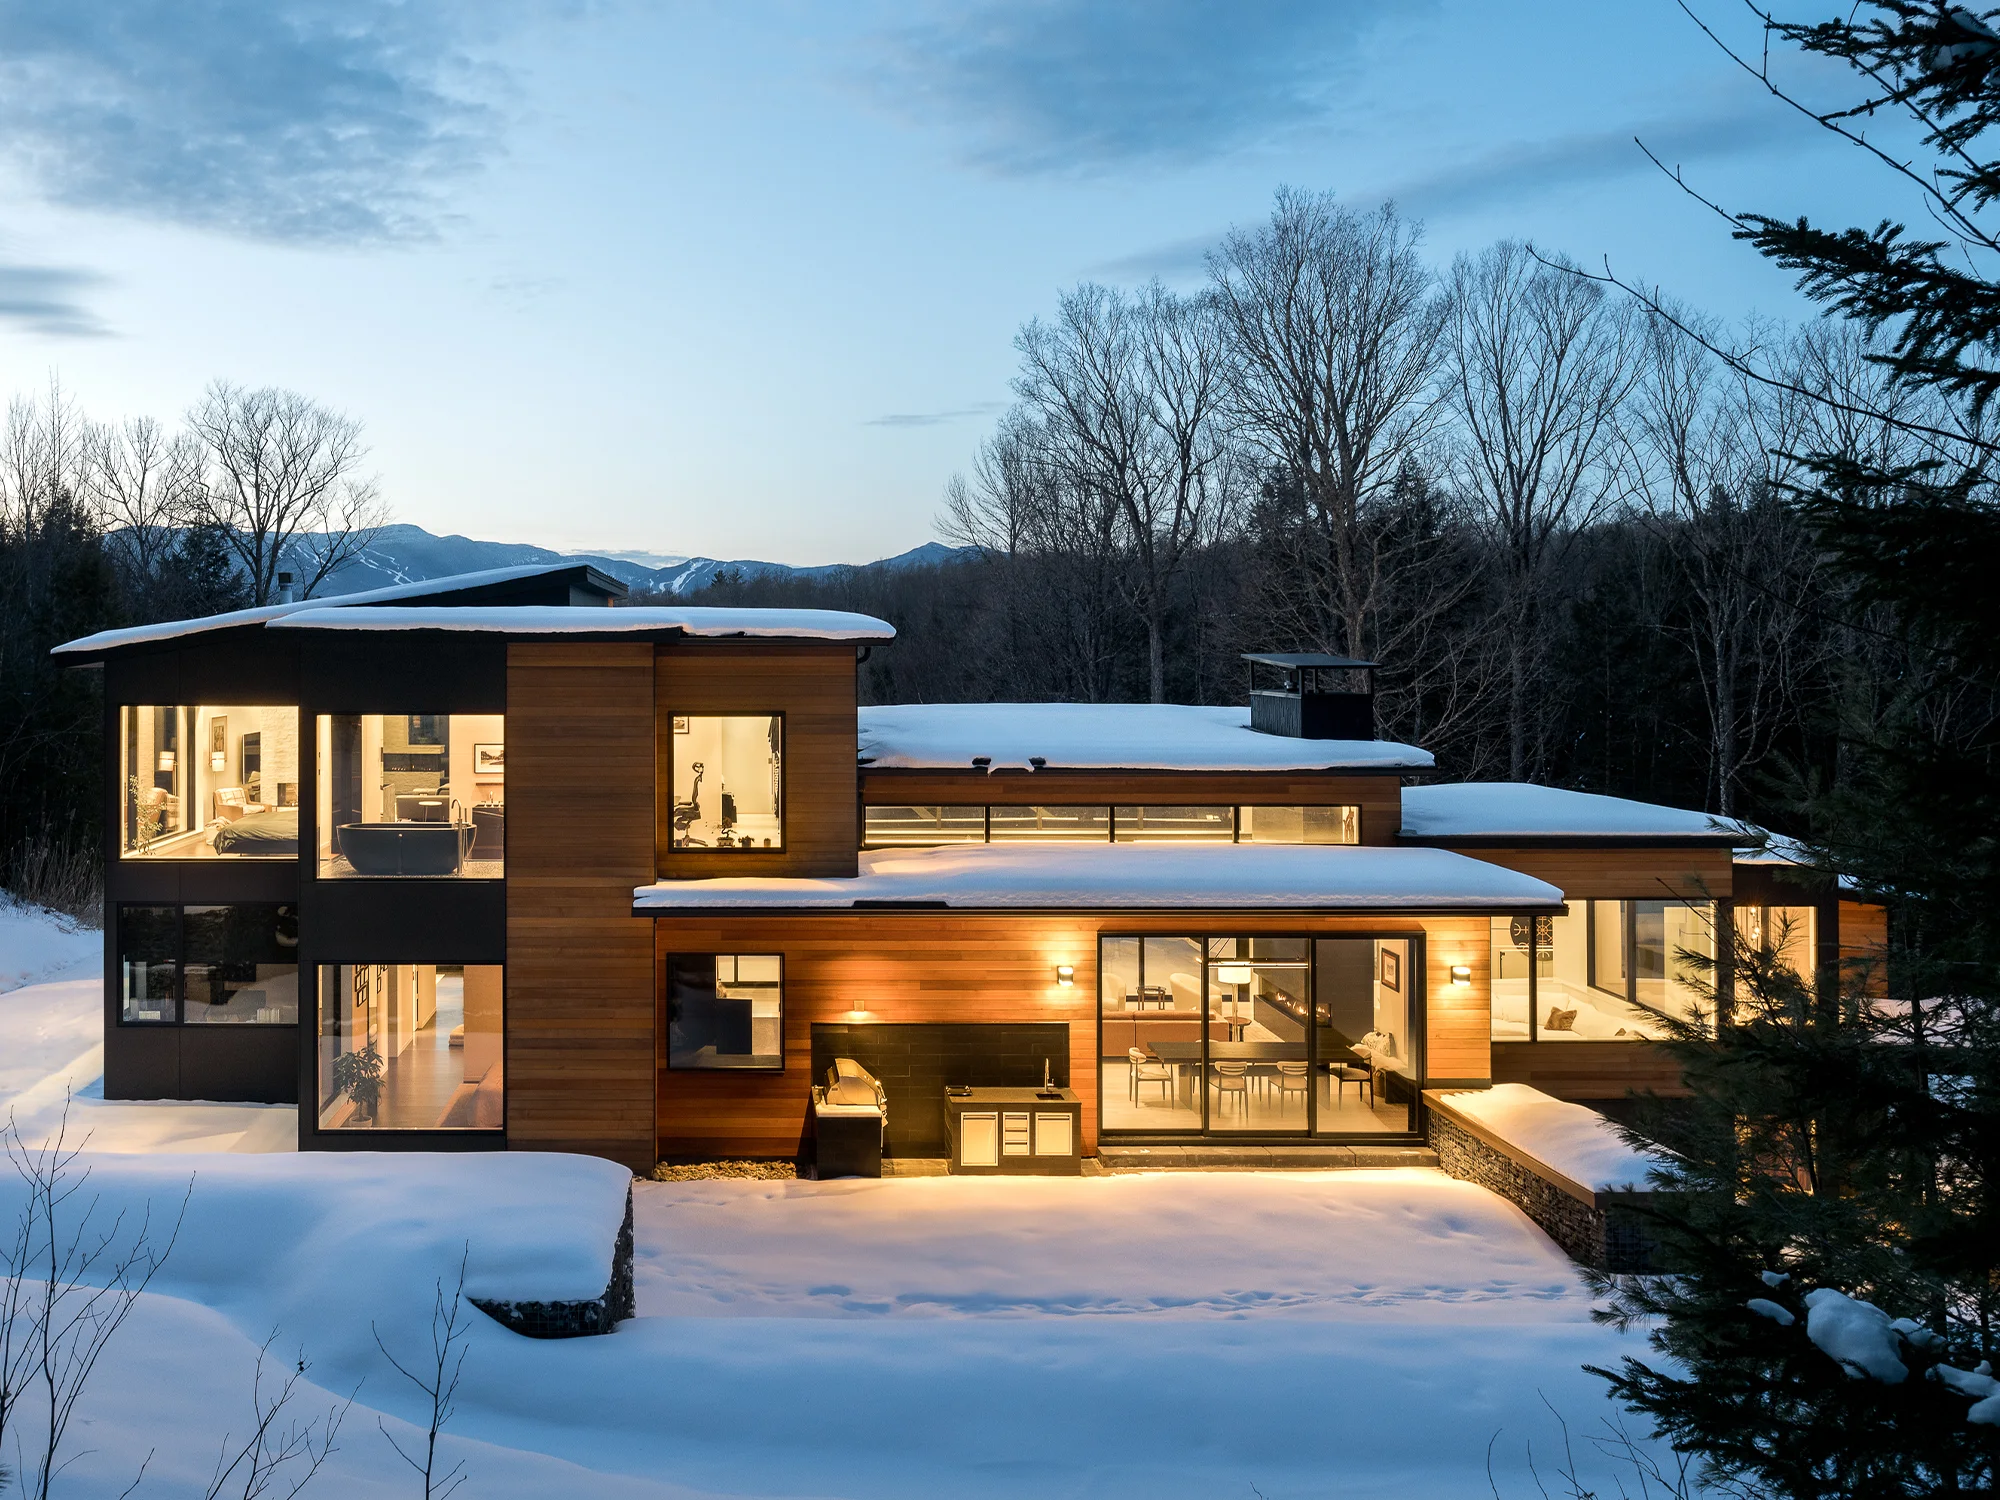 Stowe Vermont Architecture